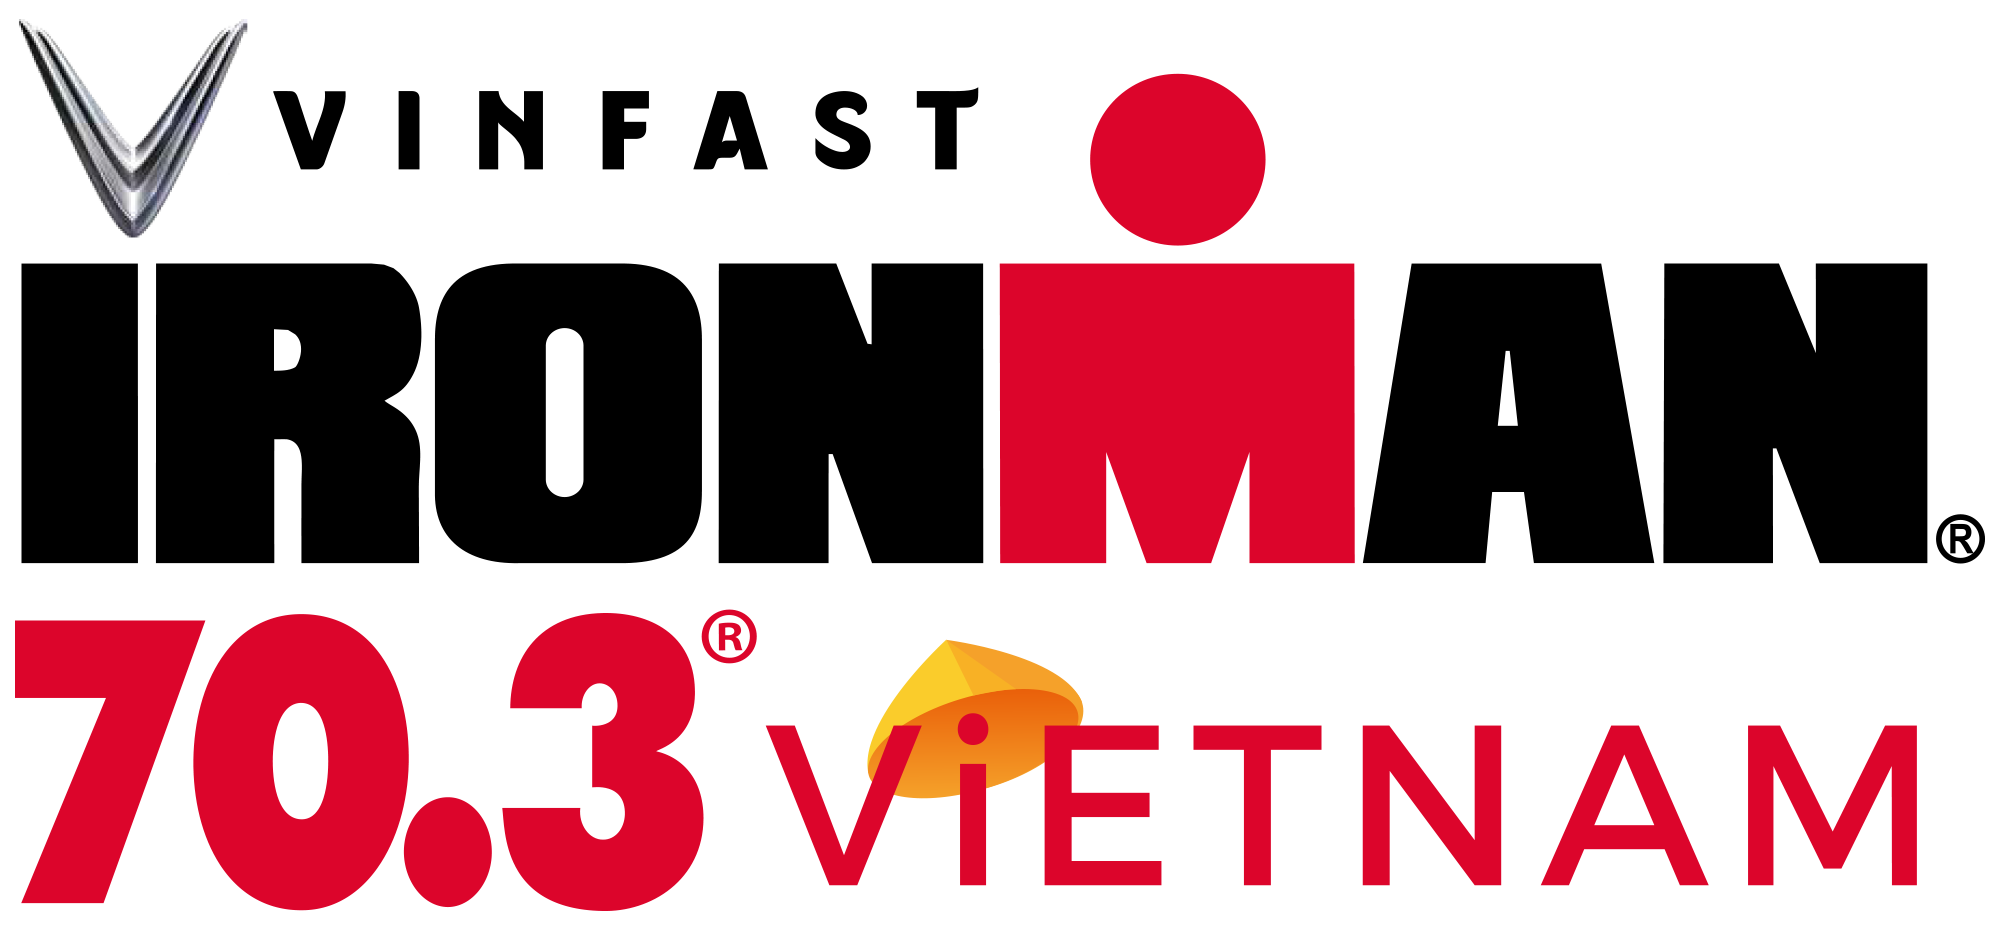 IRONMAN 70.3 Viet Nam